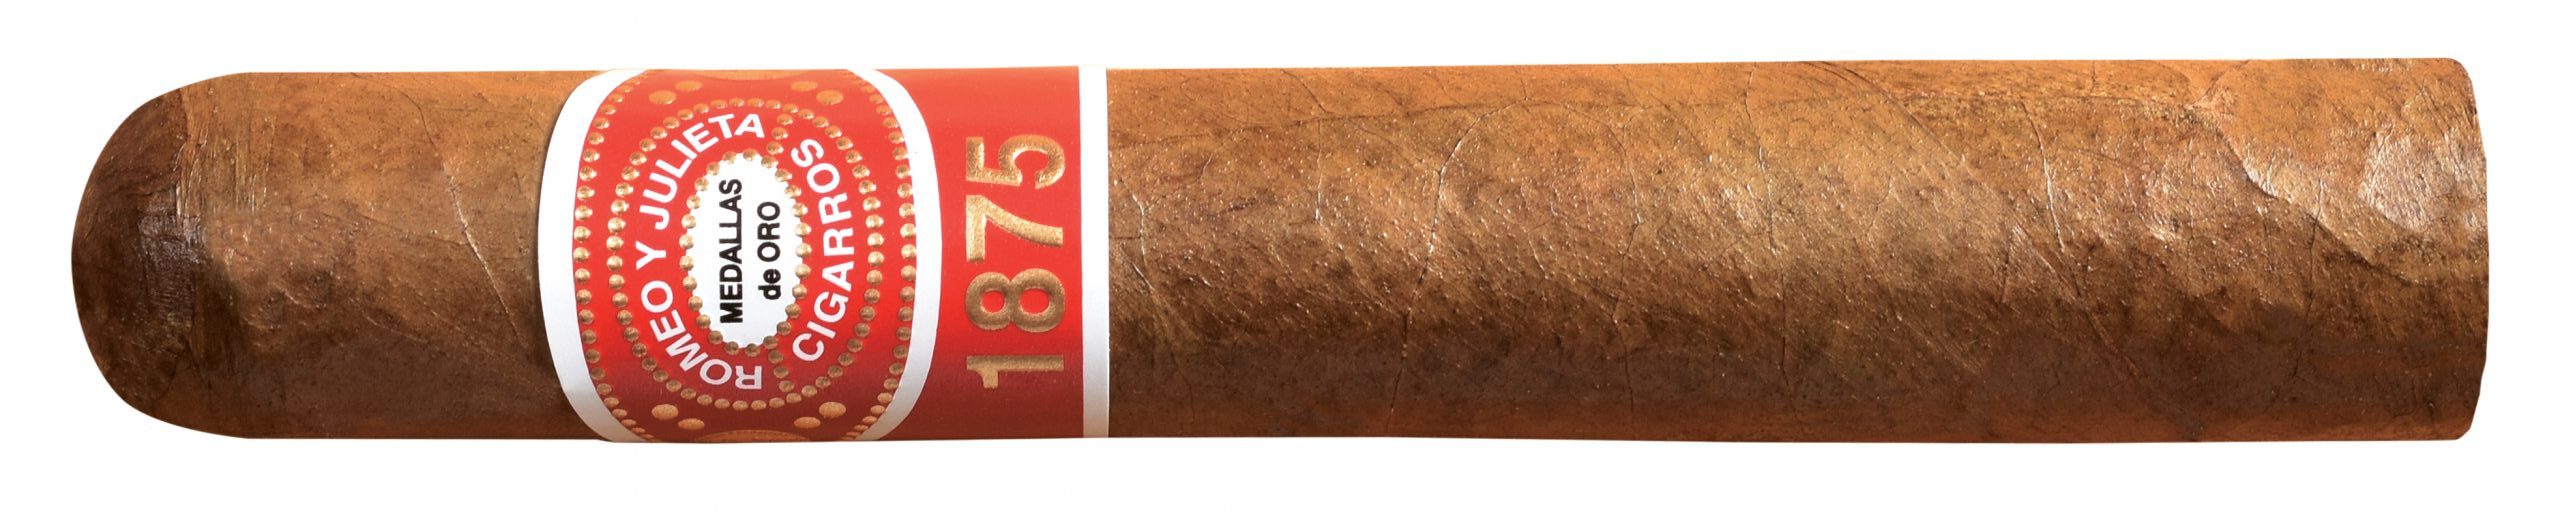 romeo y julieta 1875 bully single cigar